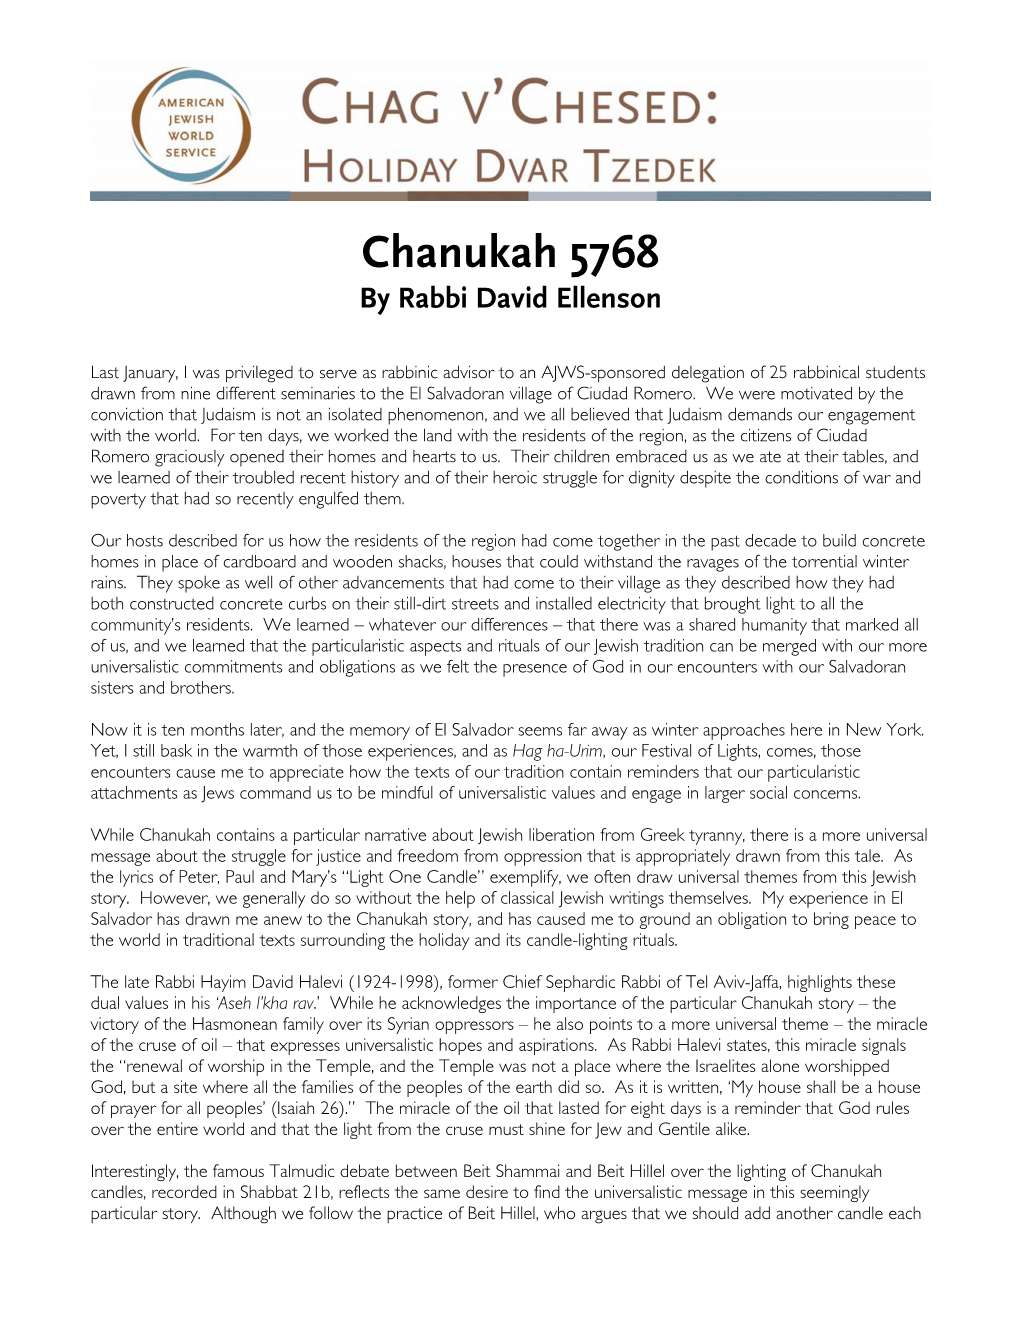 Chanukah 5768 by Rabbi David Ellenson